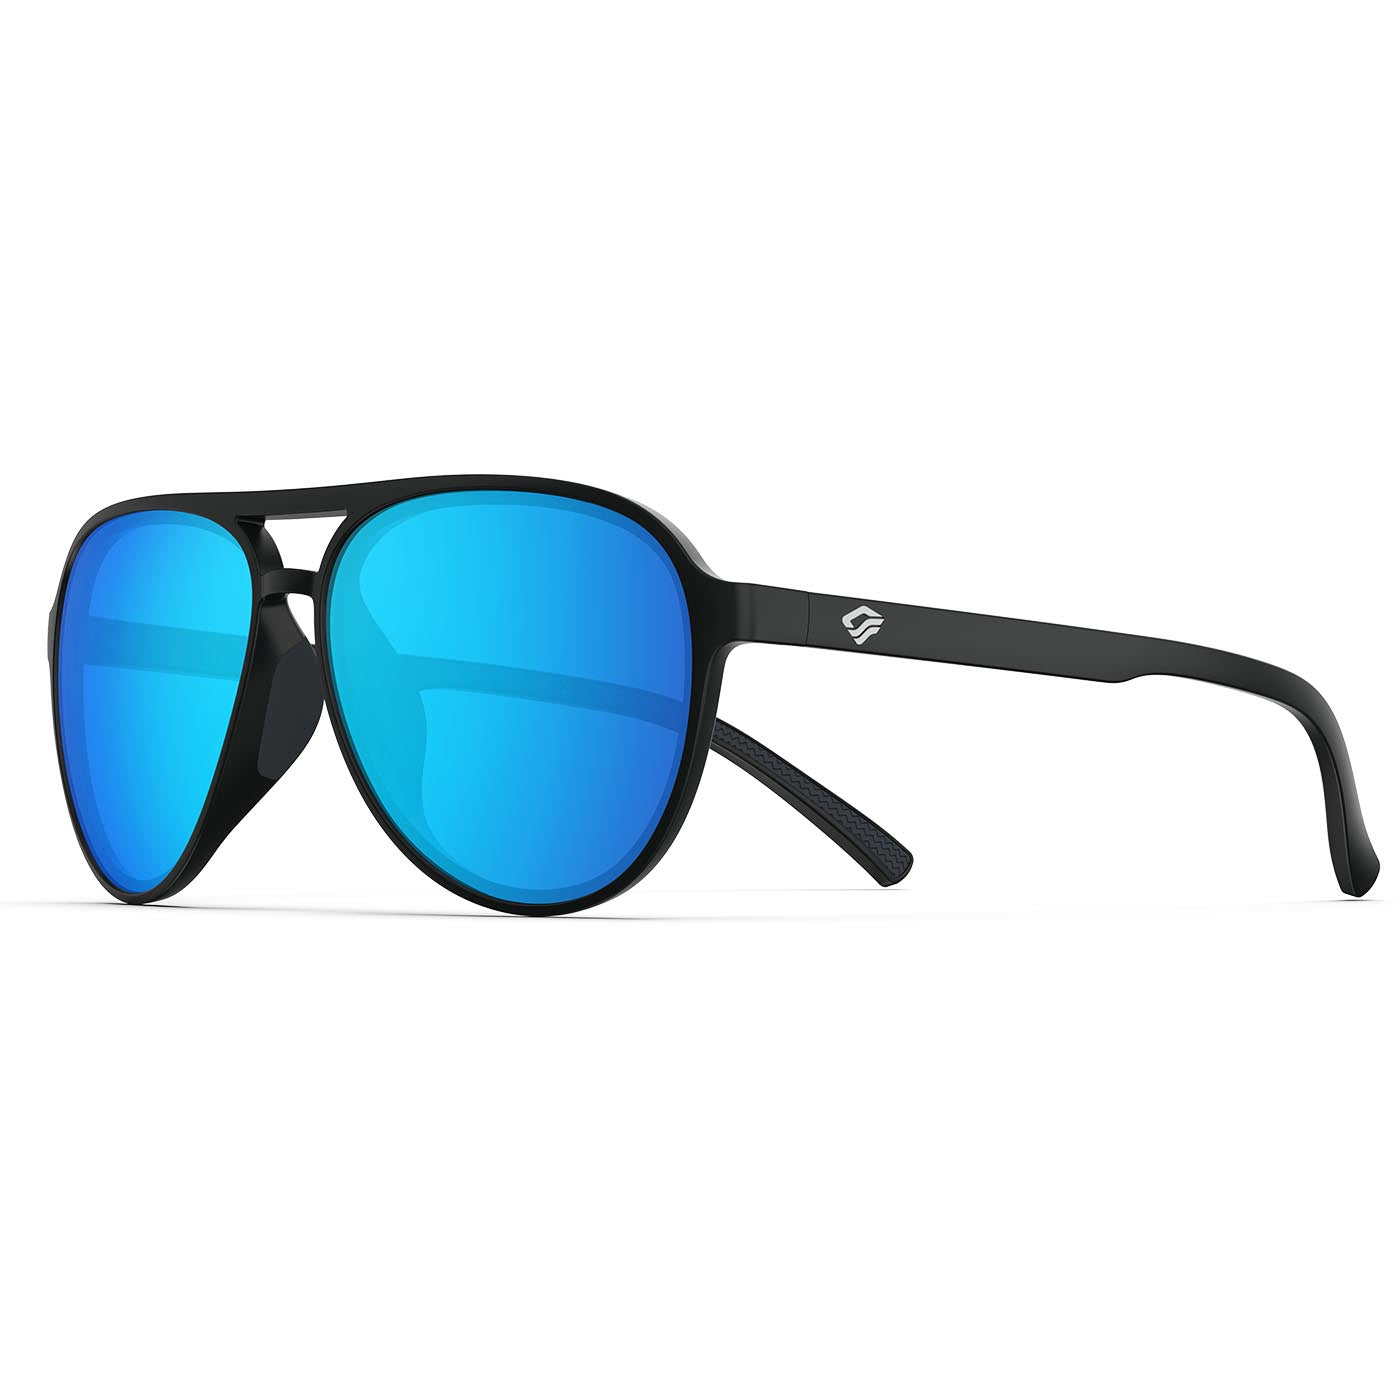 TOREGE ‘Blue Ridge’ Polarized Aviator Sunglasses - Lifetime Warranty - Men & Women Sports Glasses for Fishing, Boating, Beach, Golf, & Driving